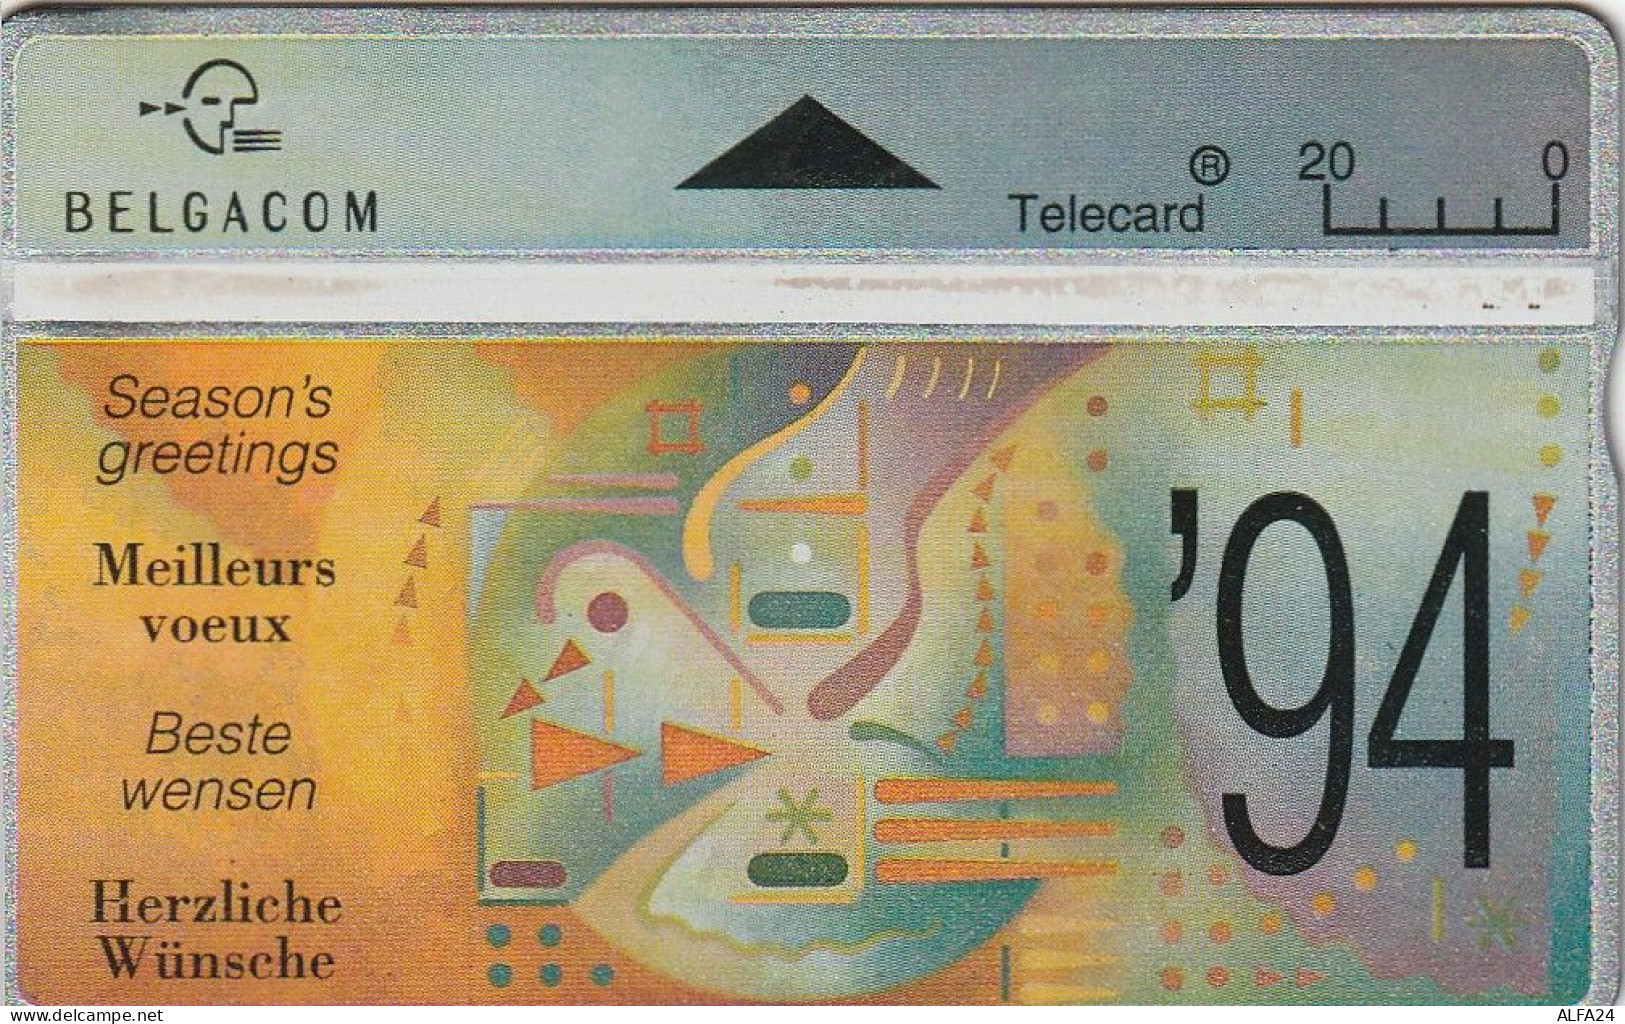 PHONE CARD BELGIO LG (CV6647 - Senza Chip